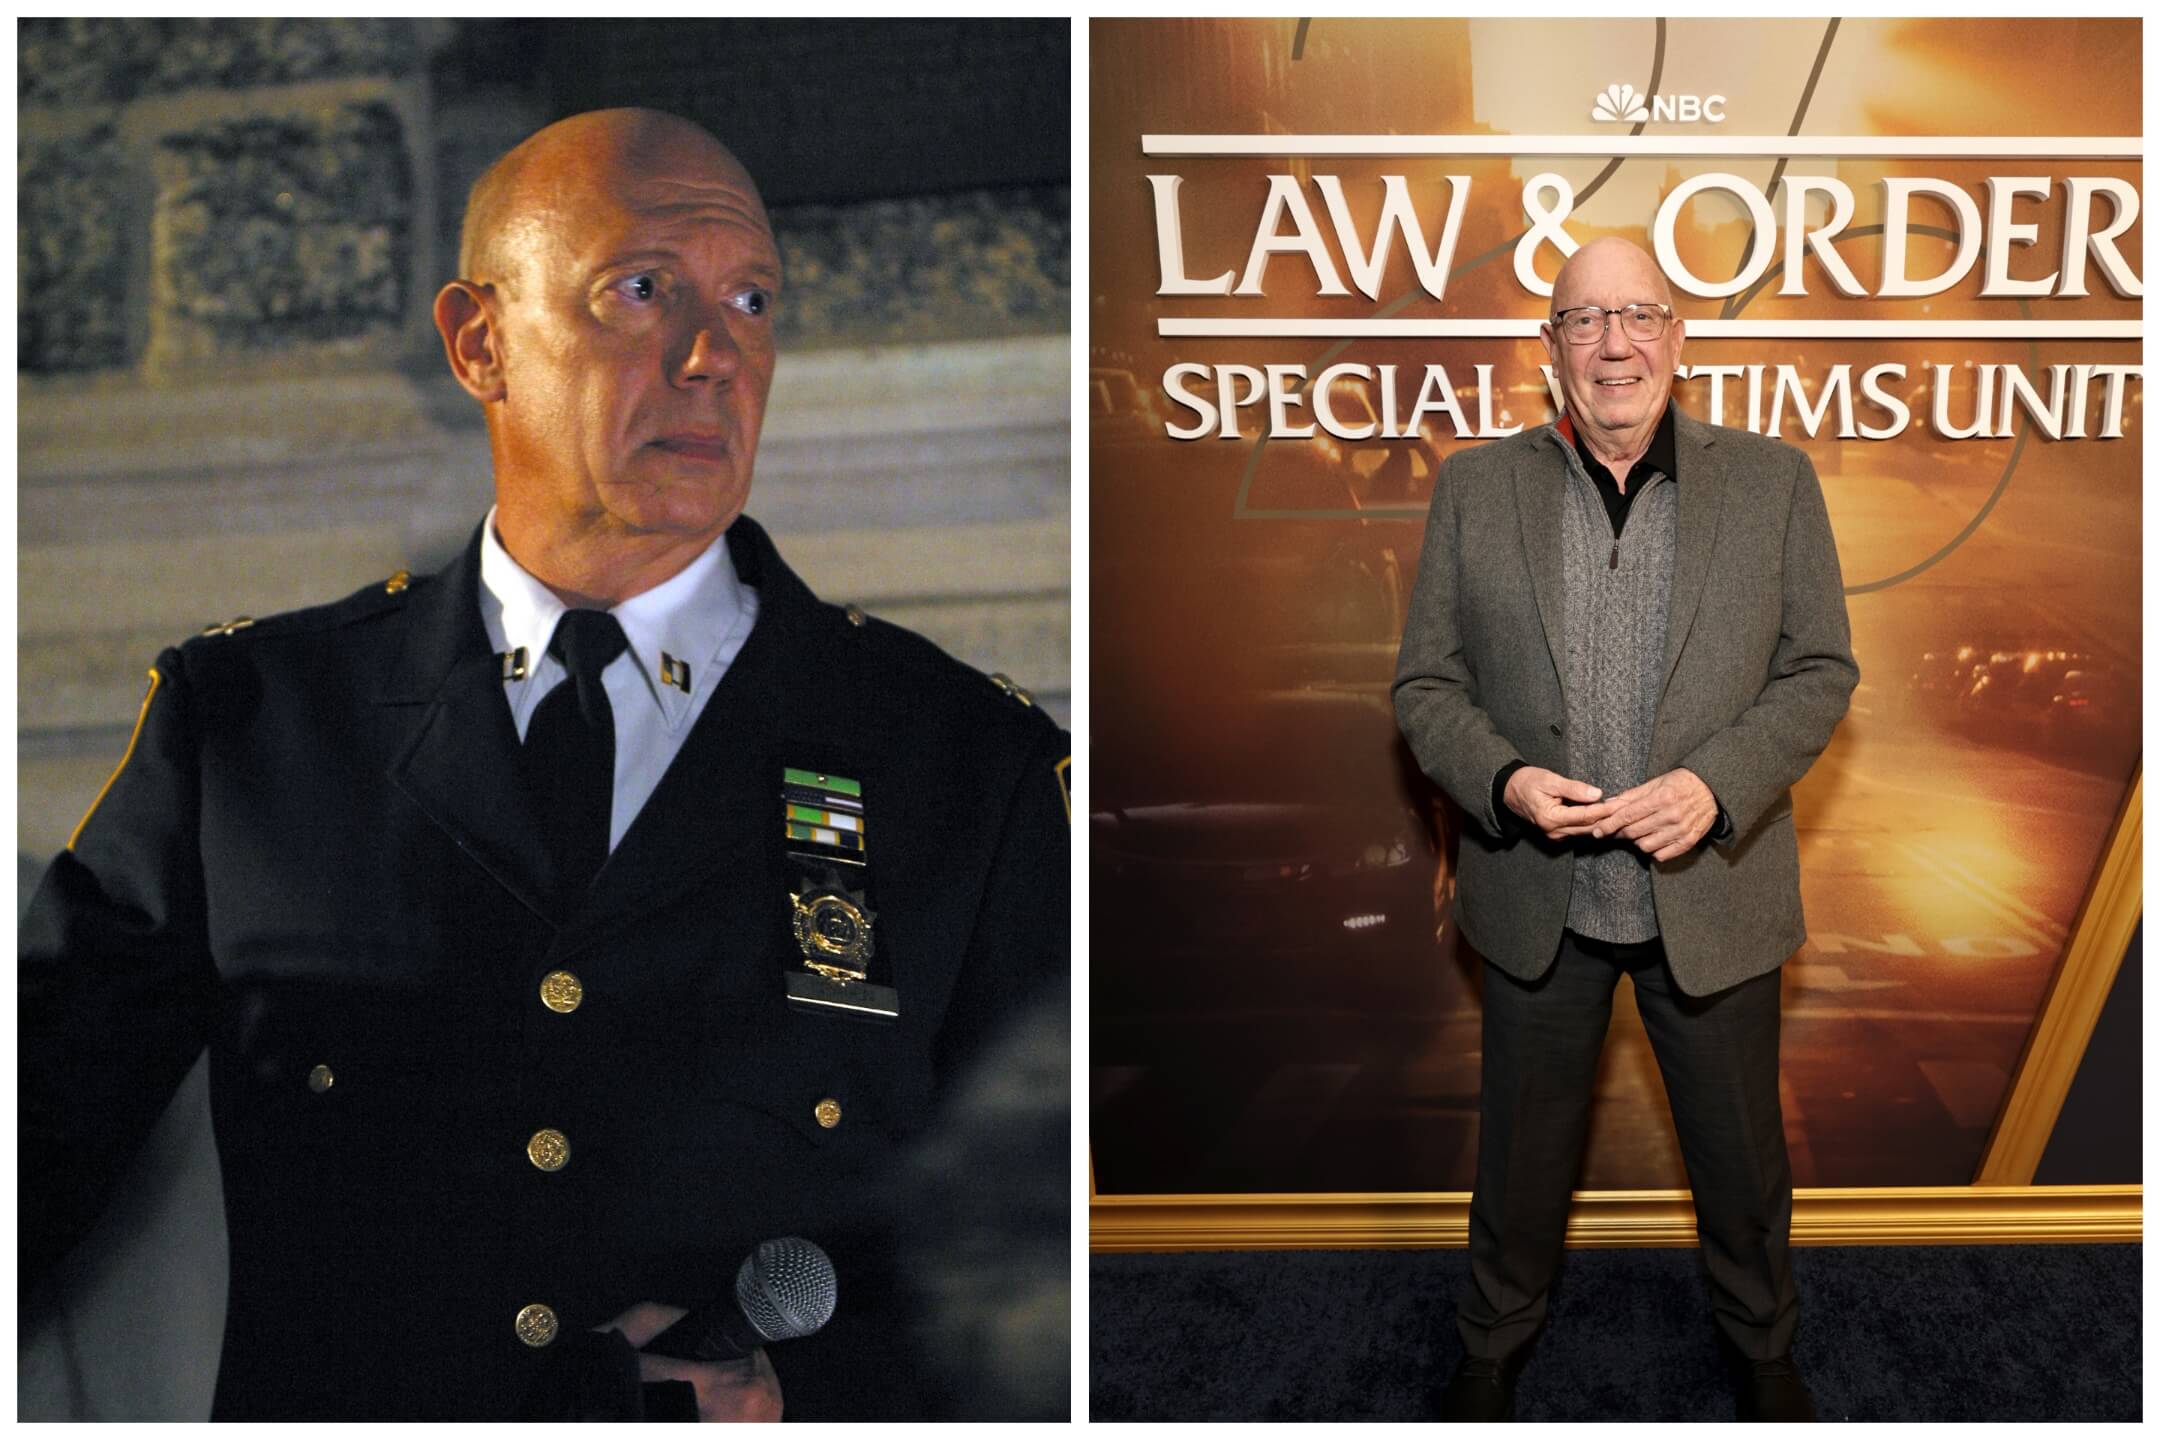 'Law & Order: SVU' actor Dann Florek